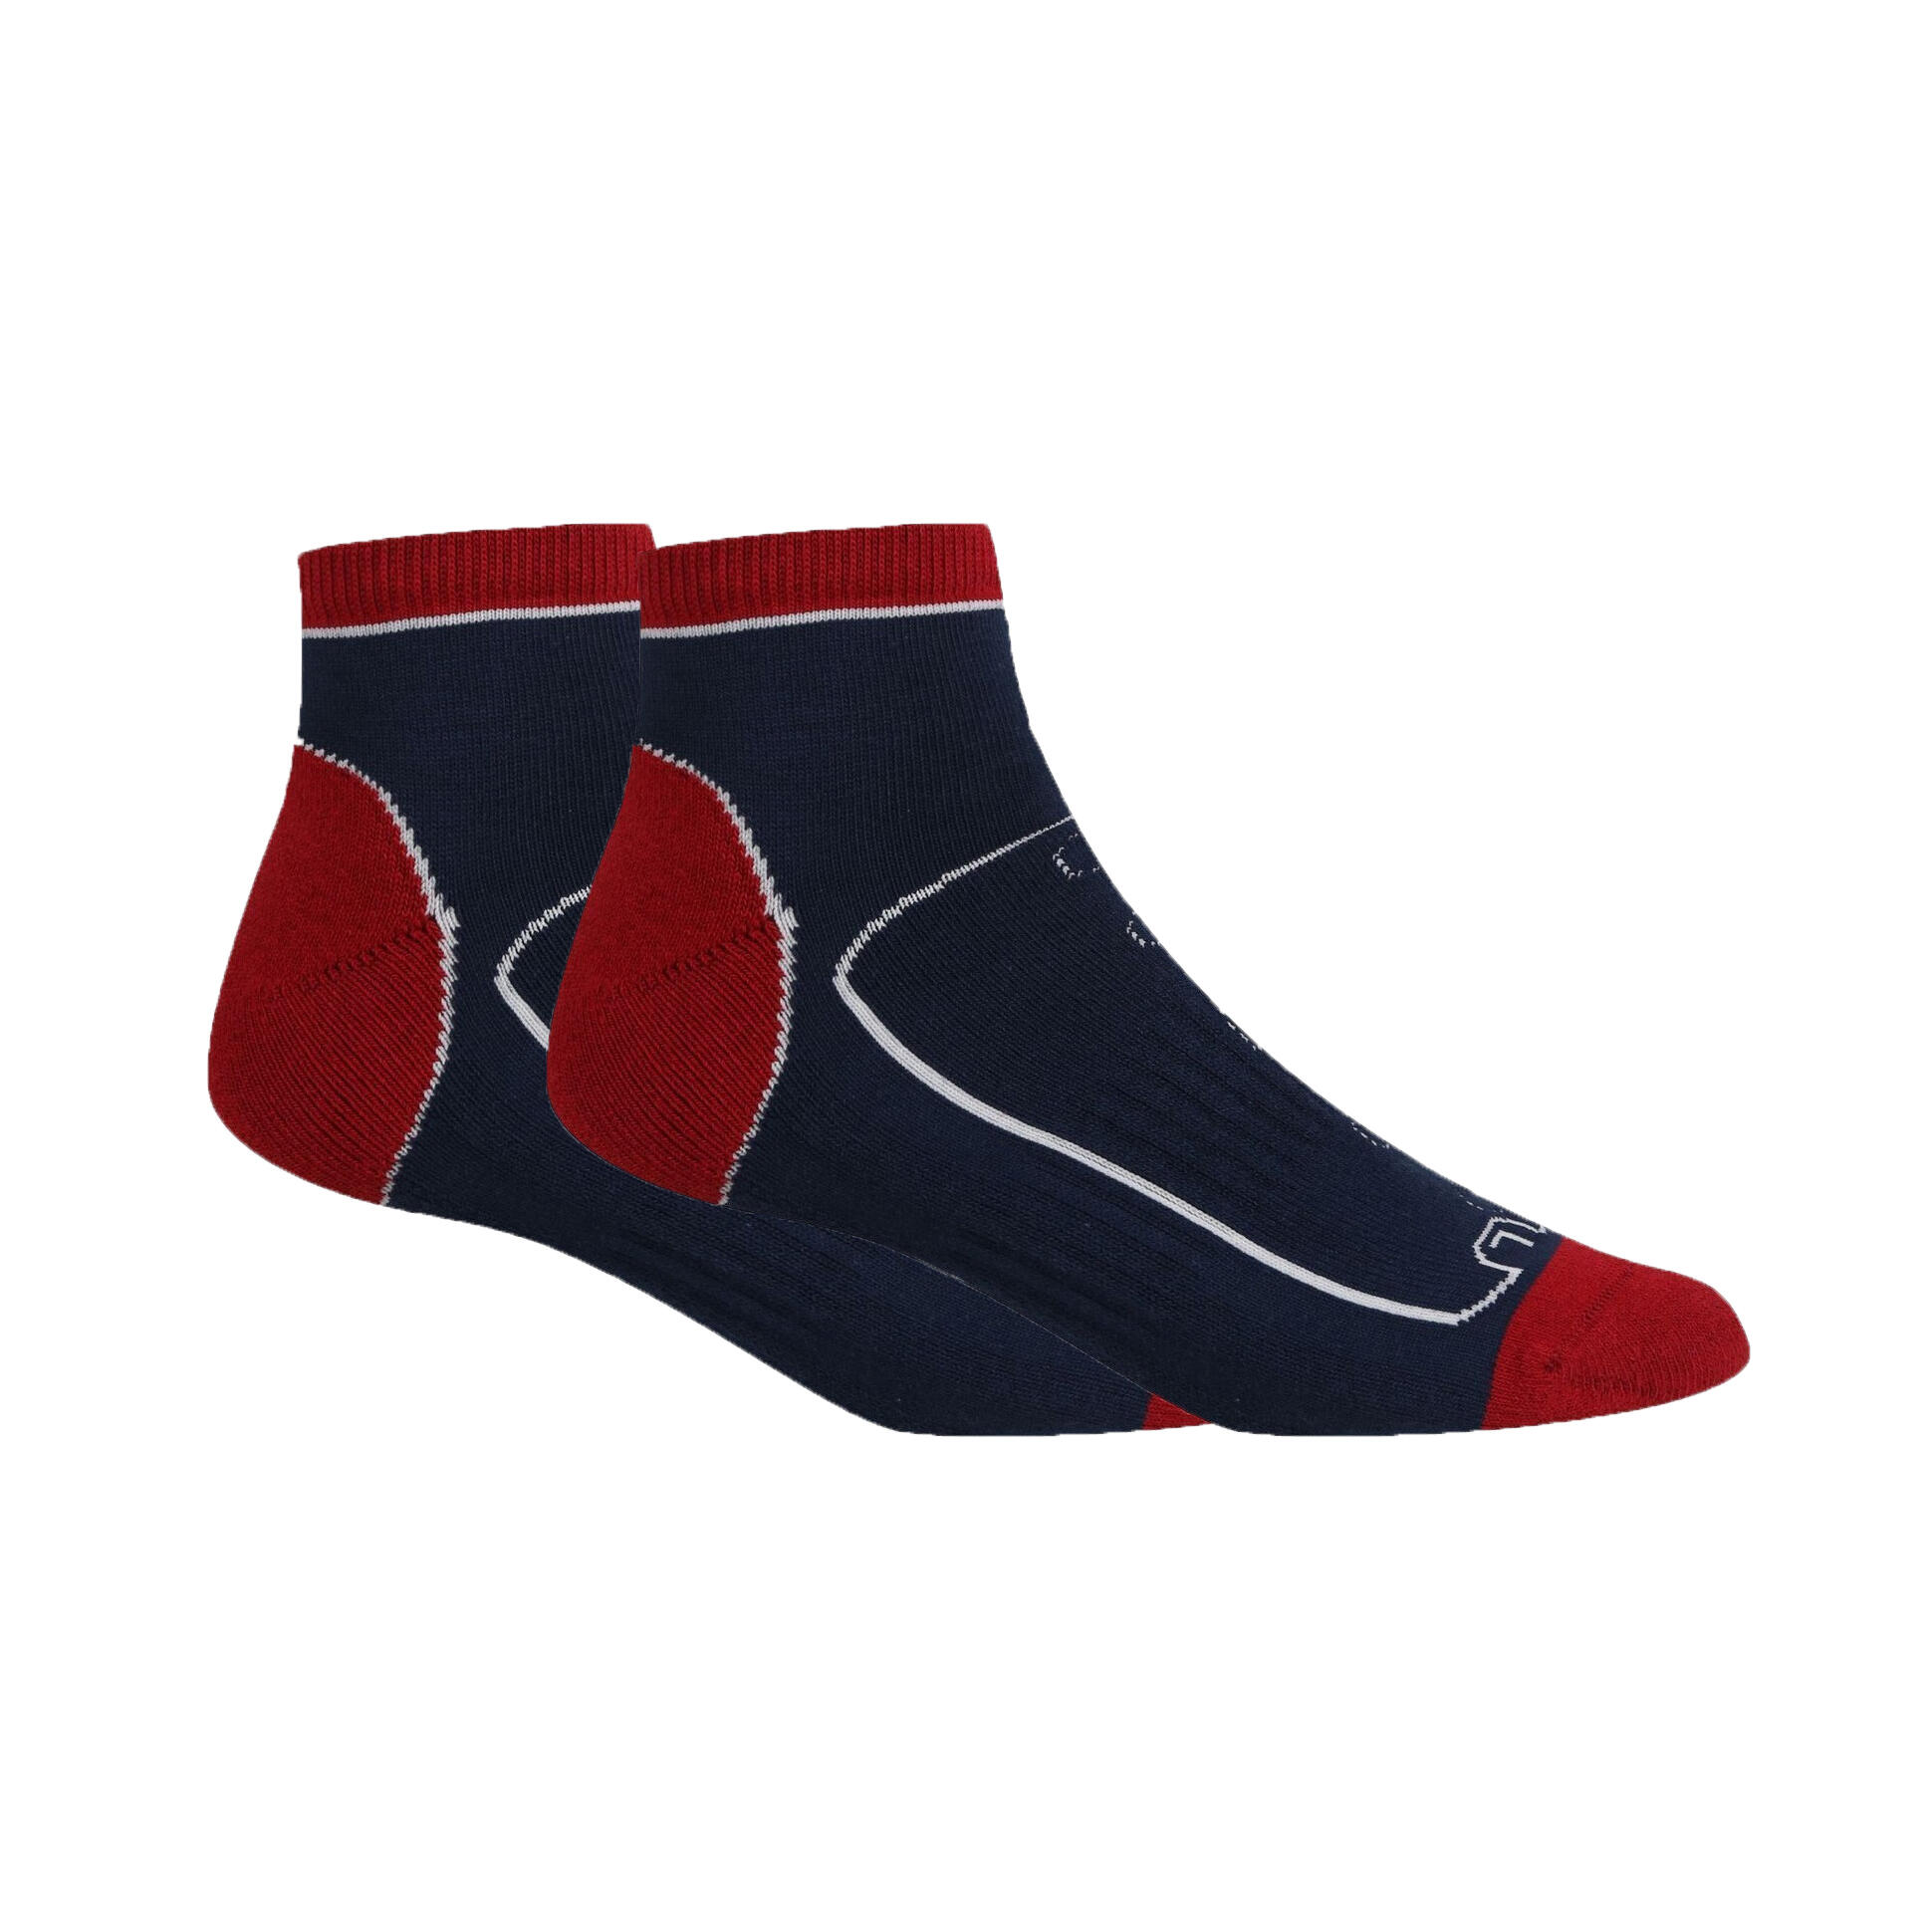 Mens Samaris Trail Ankle Socks (Pack of 2) (Navy/Dark Red) 2/4